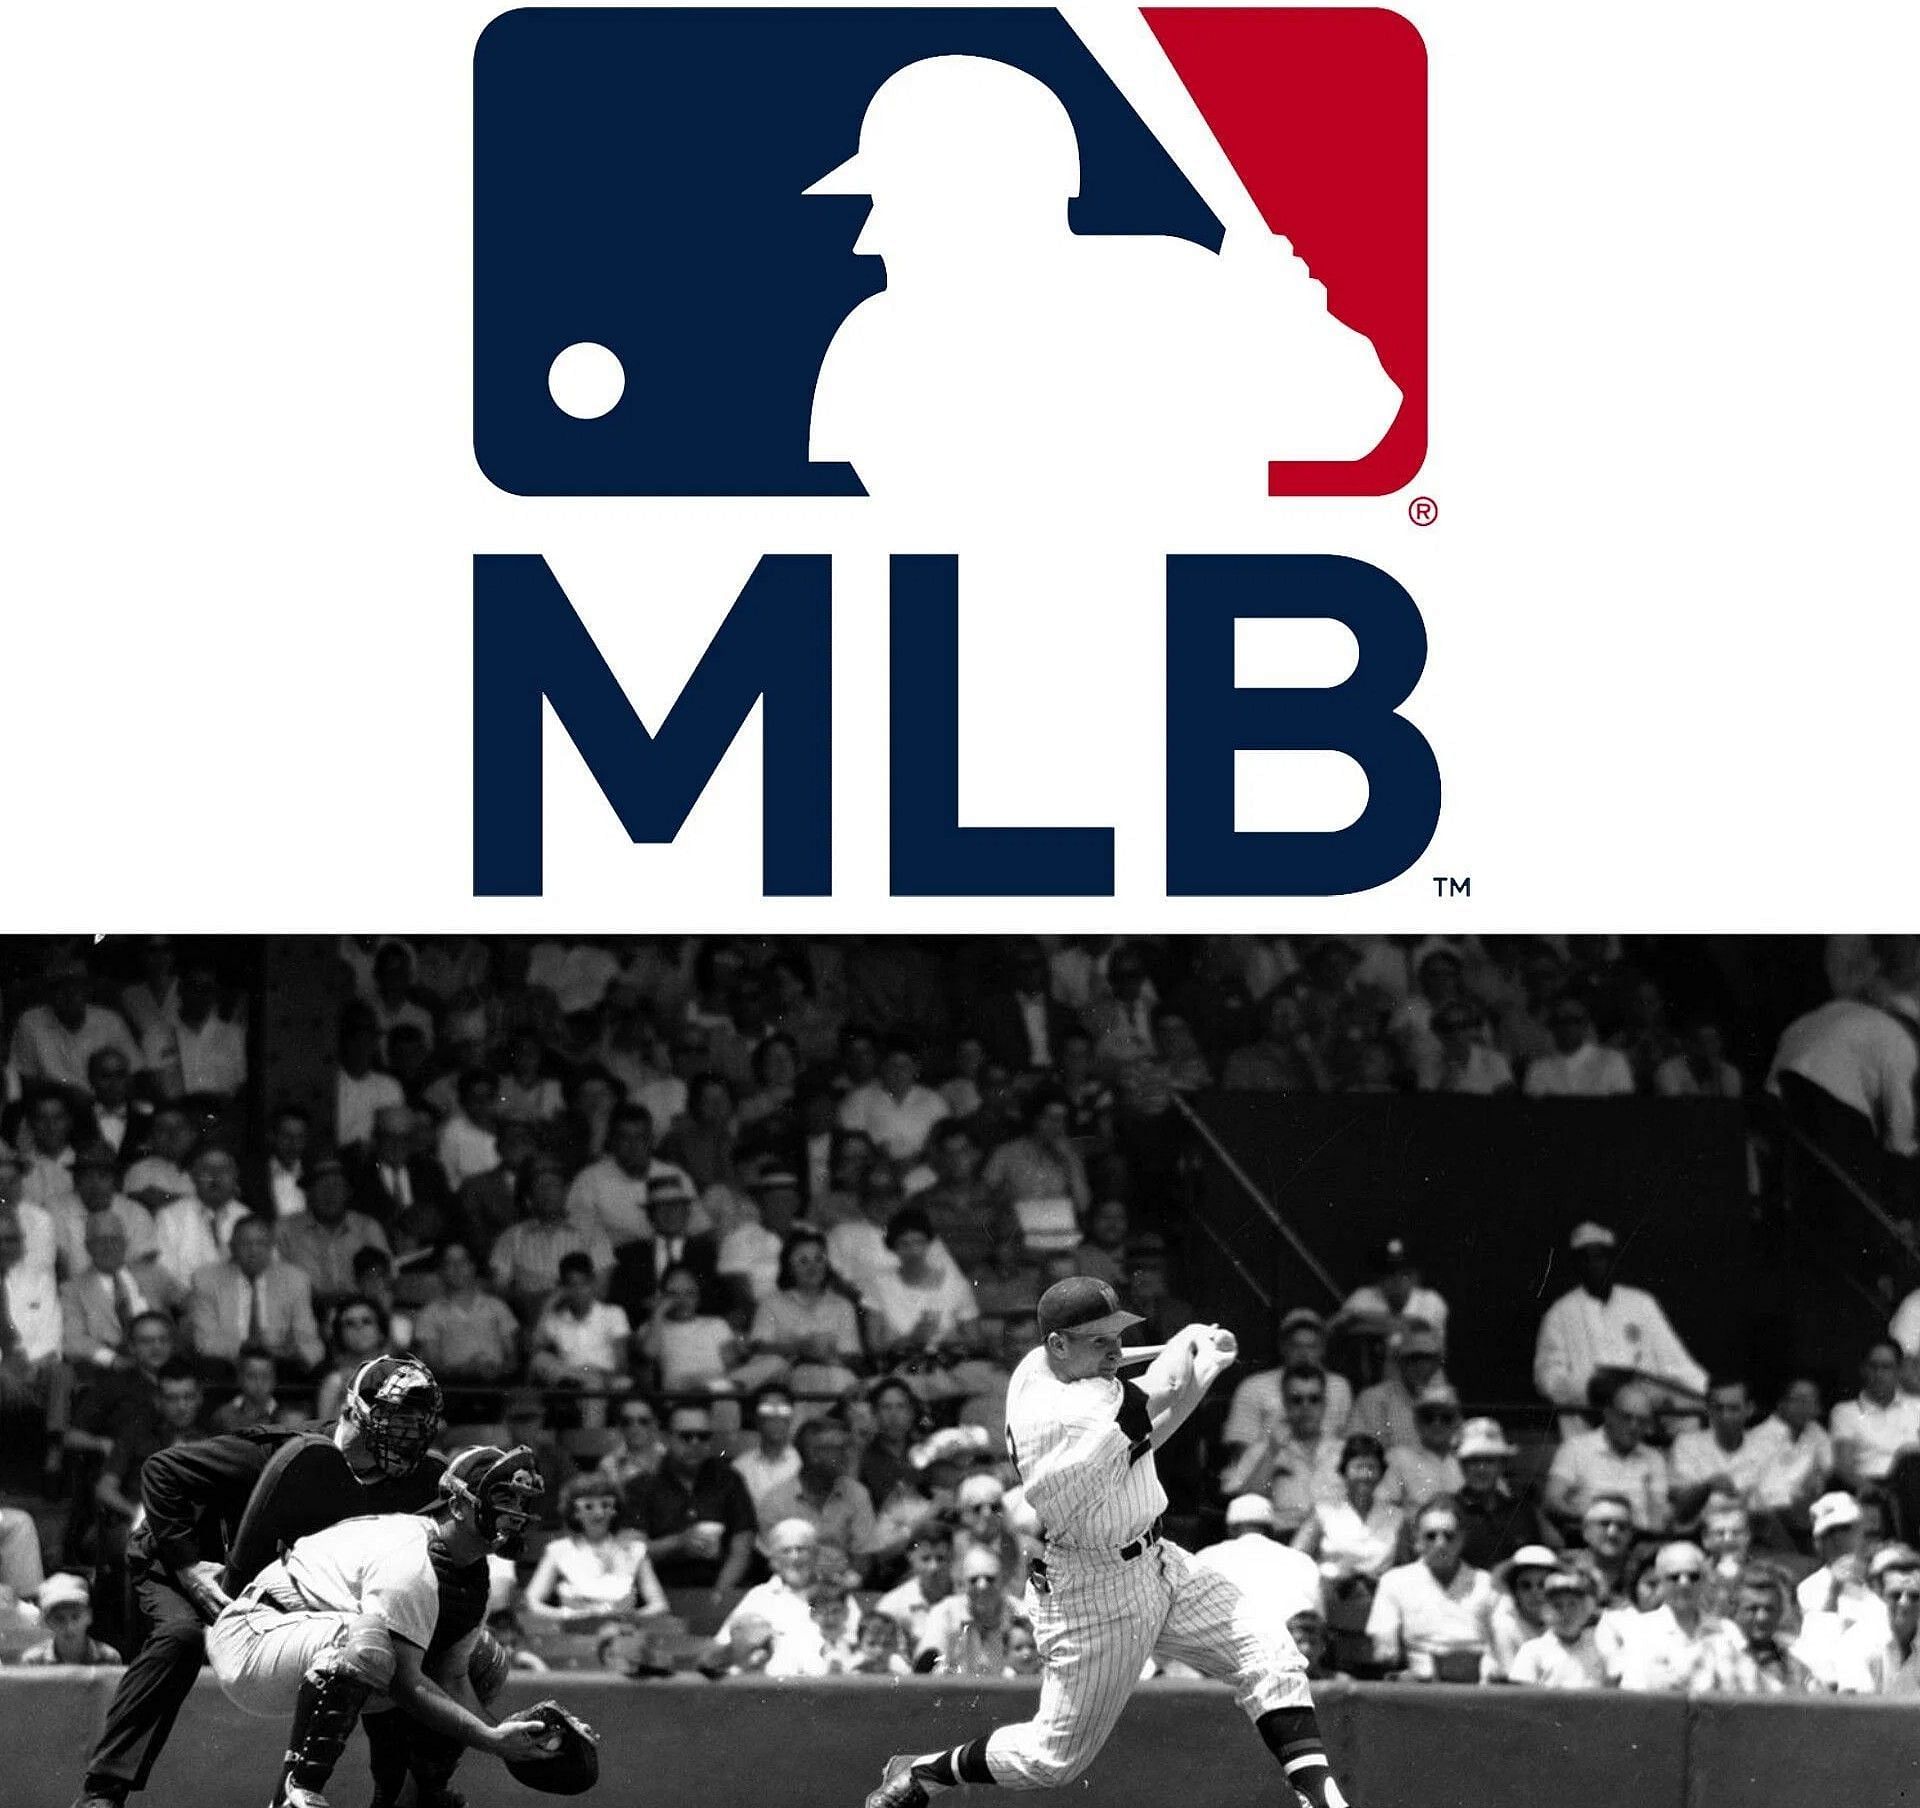 Is Harmon Killebrew the MLB logo?